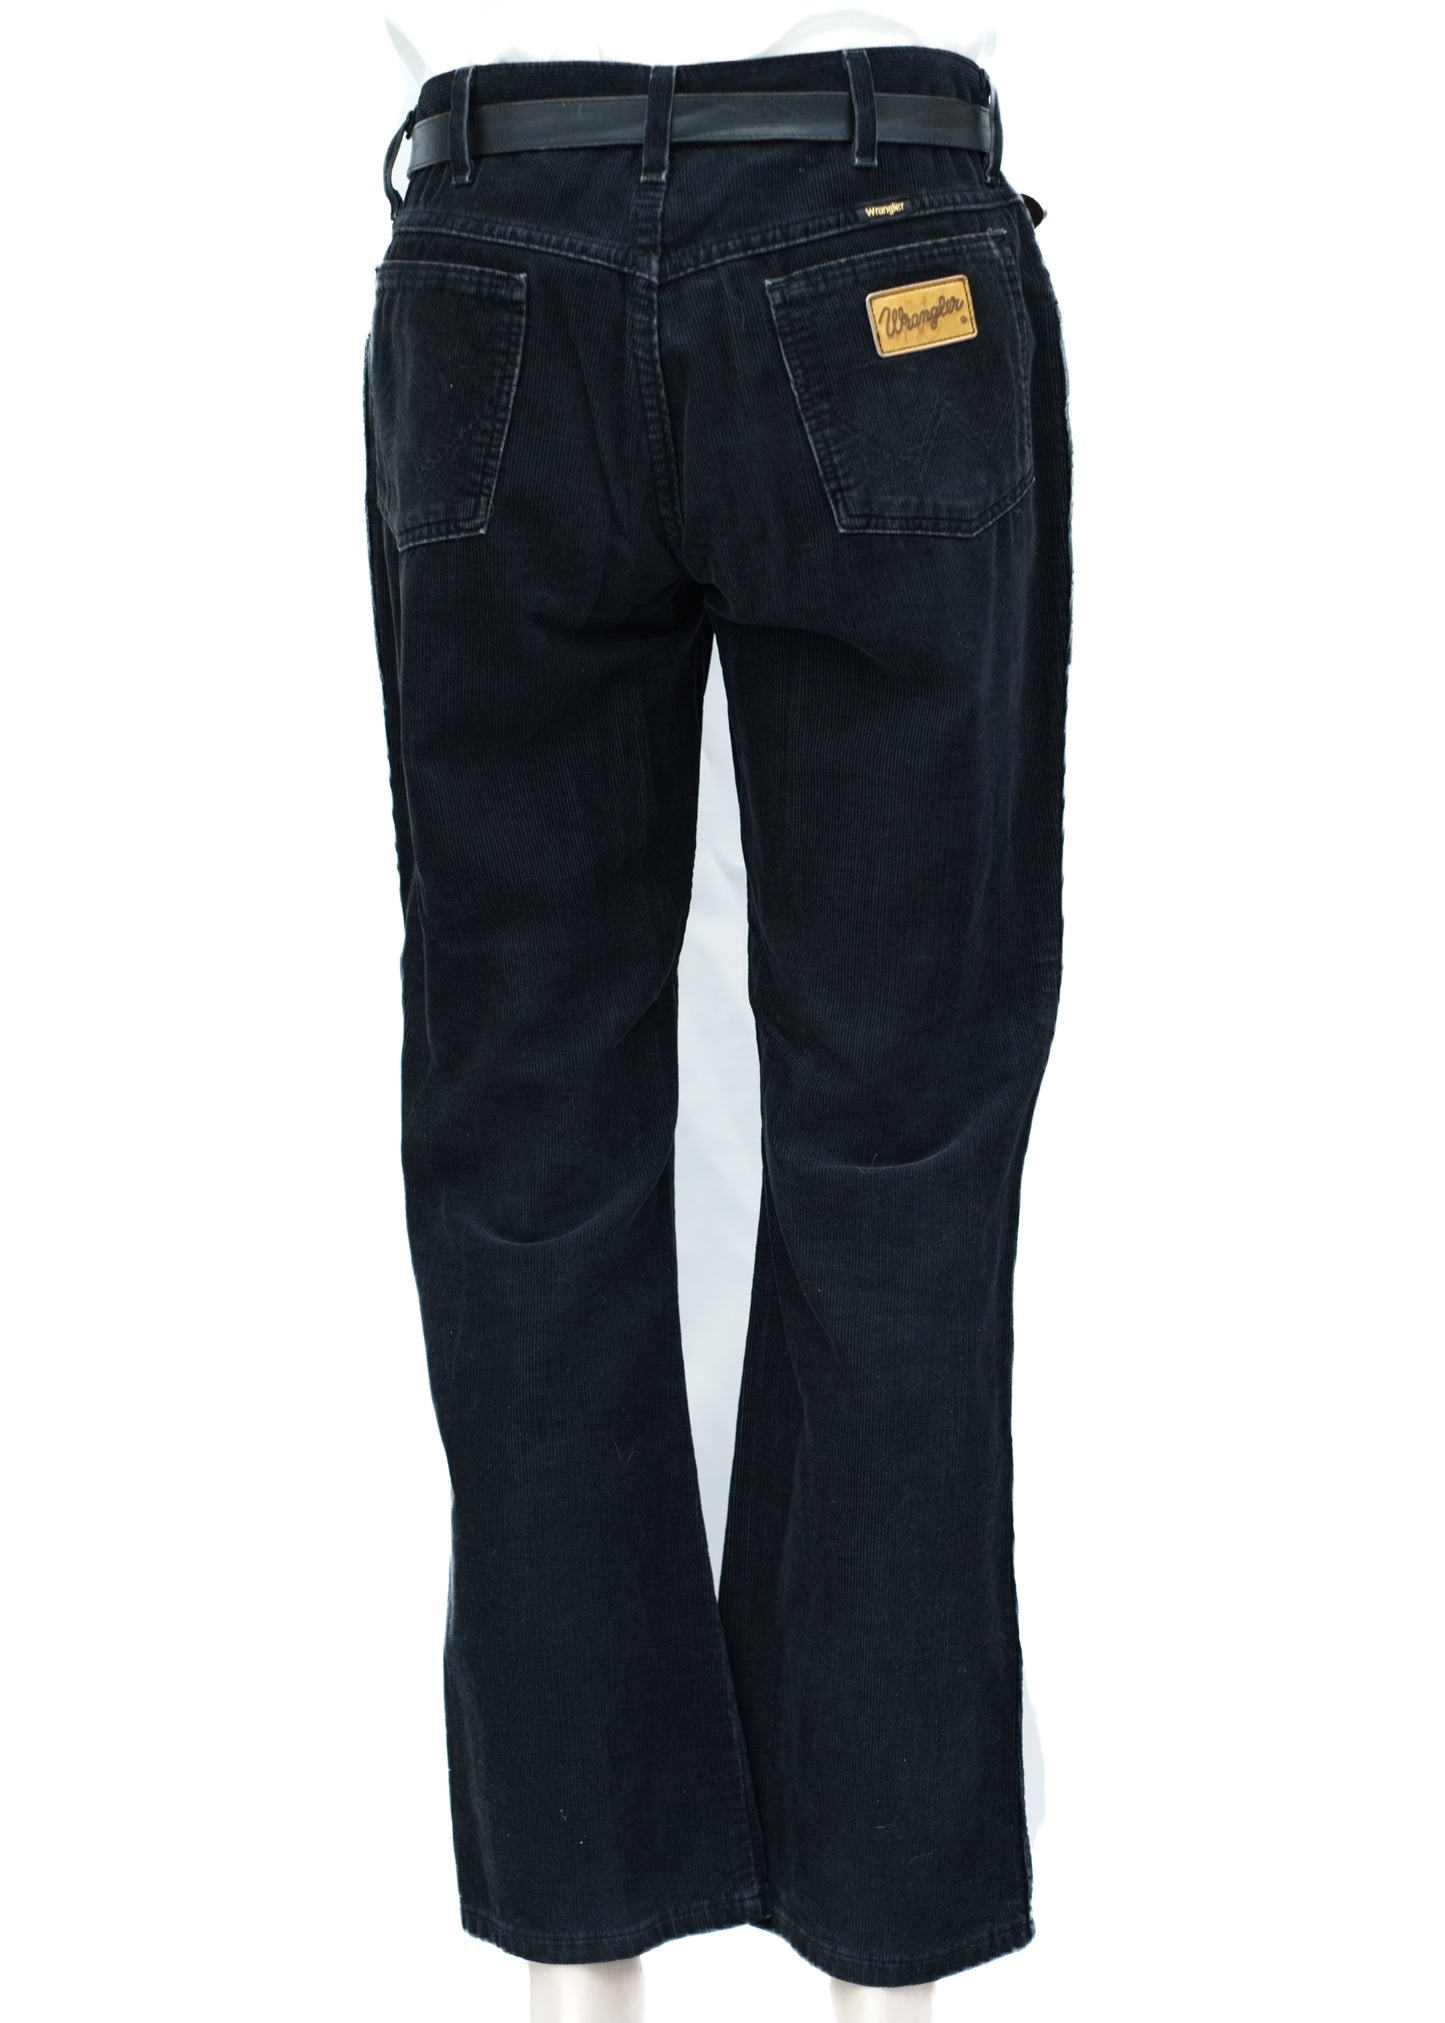 1970s Black Wrangler Corduroy Flared Jeans